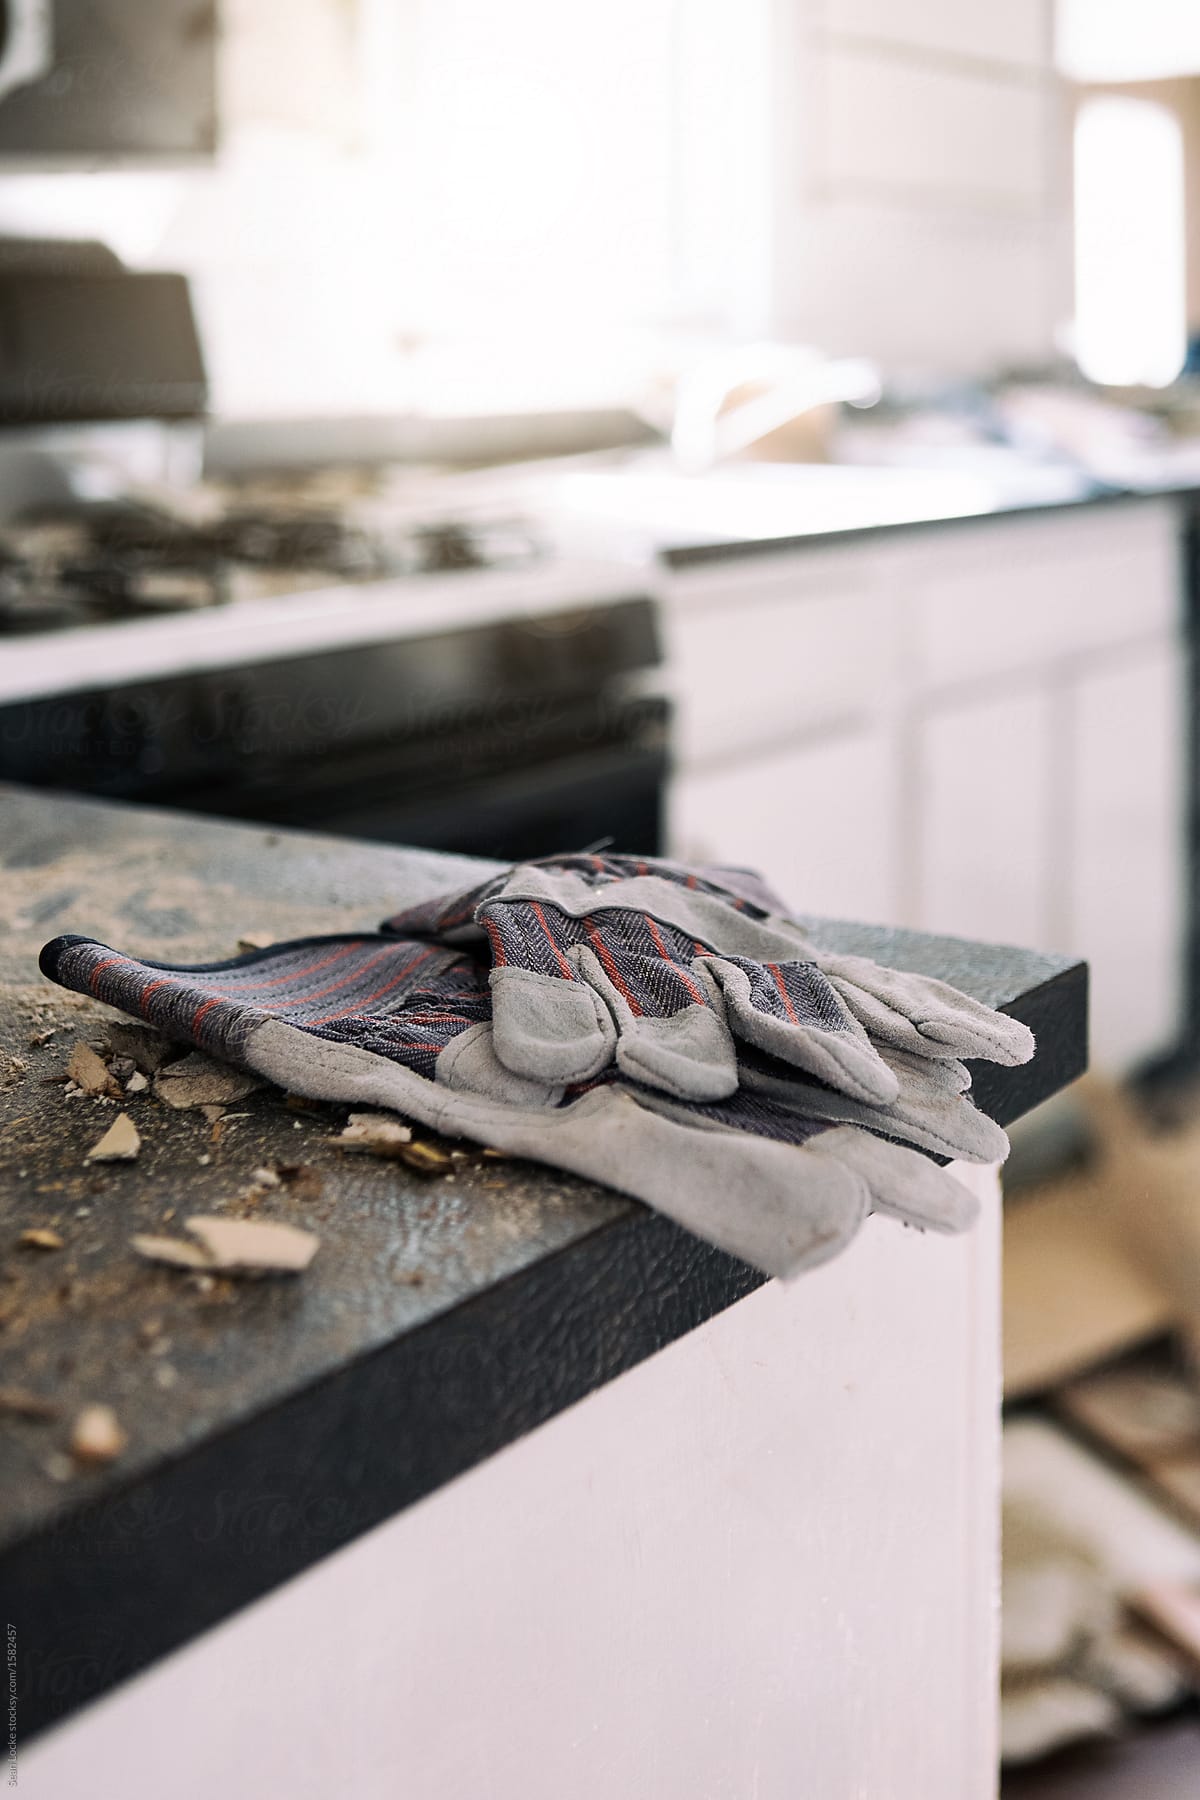 Kitchen: Work Gloves Sit On Messy Countertop